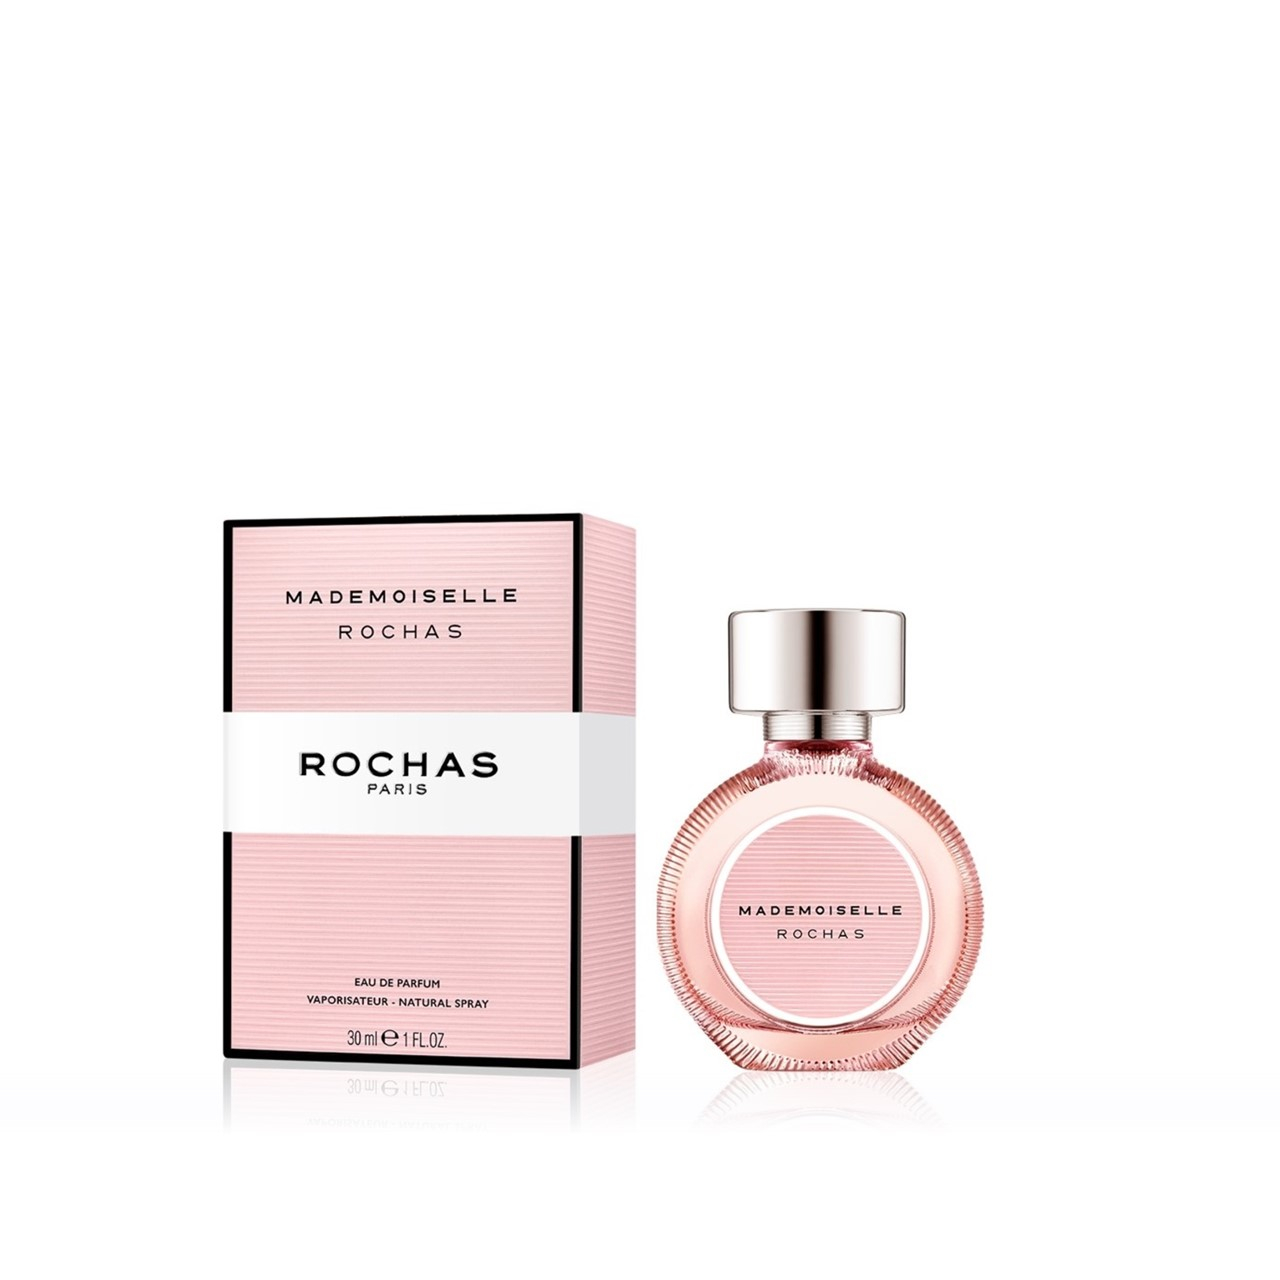 Rochas Mademoiselle Rochas Eau de Parfum 30ml (1.0fl oz)